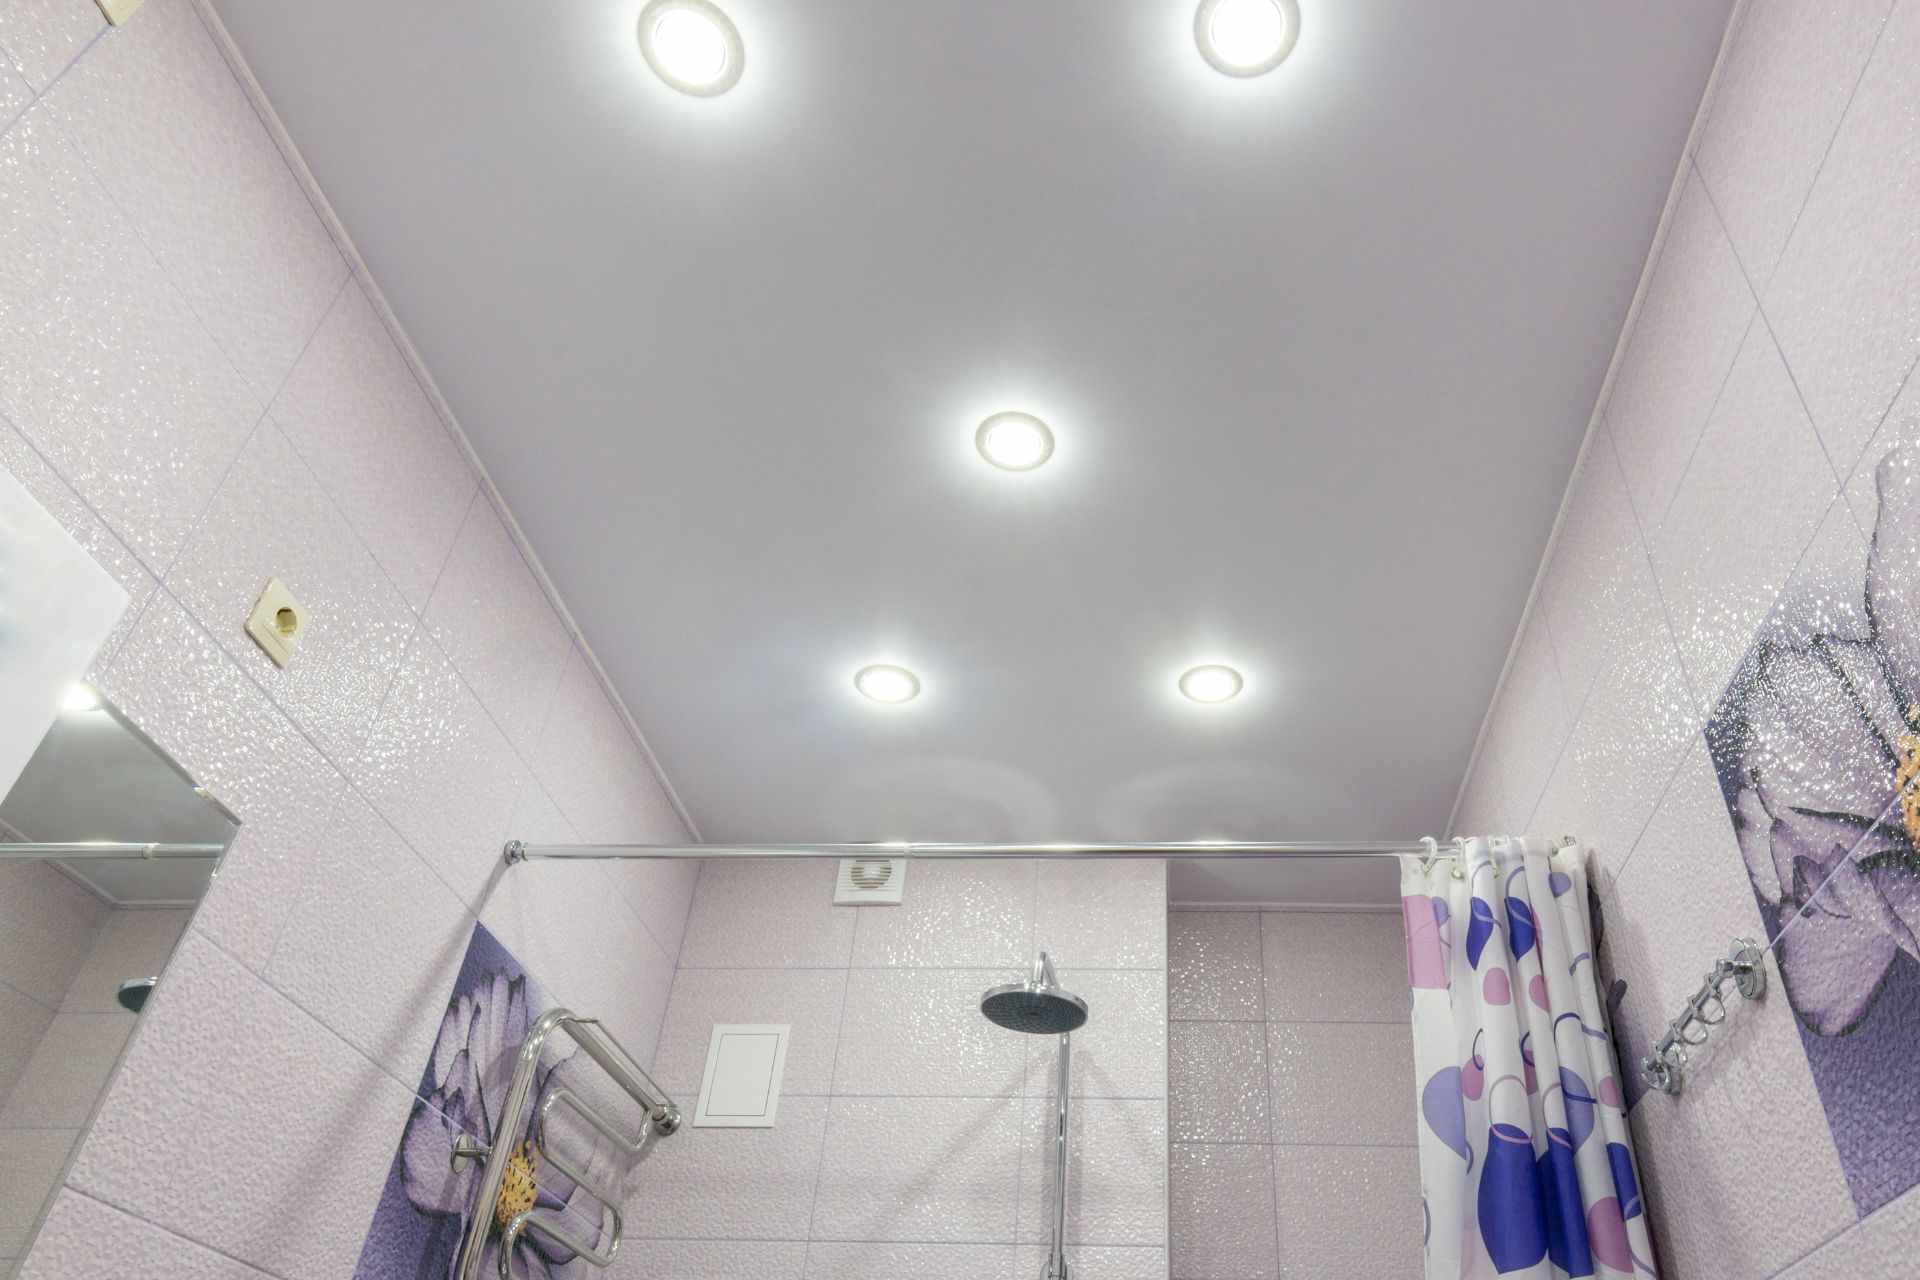 Bathroom Ceiling Ideas: 12 Designs That Bring The Wow Factor